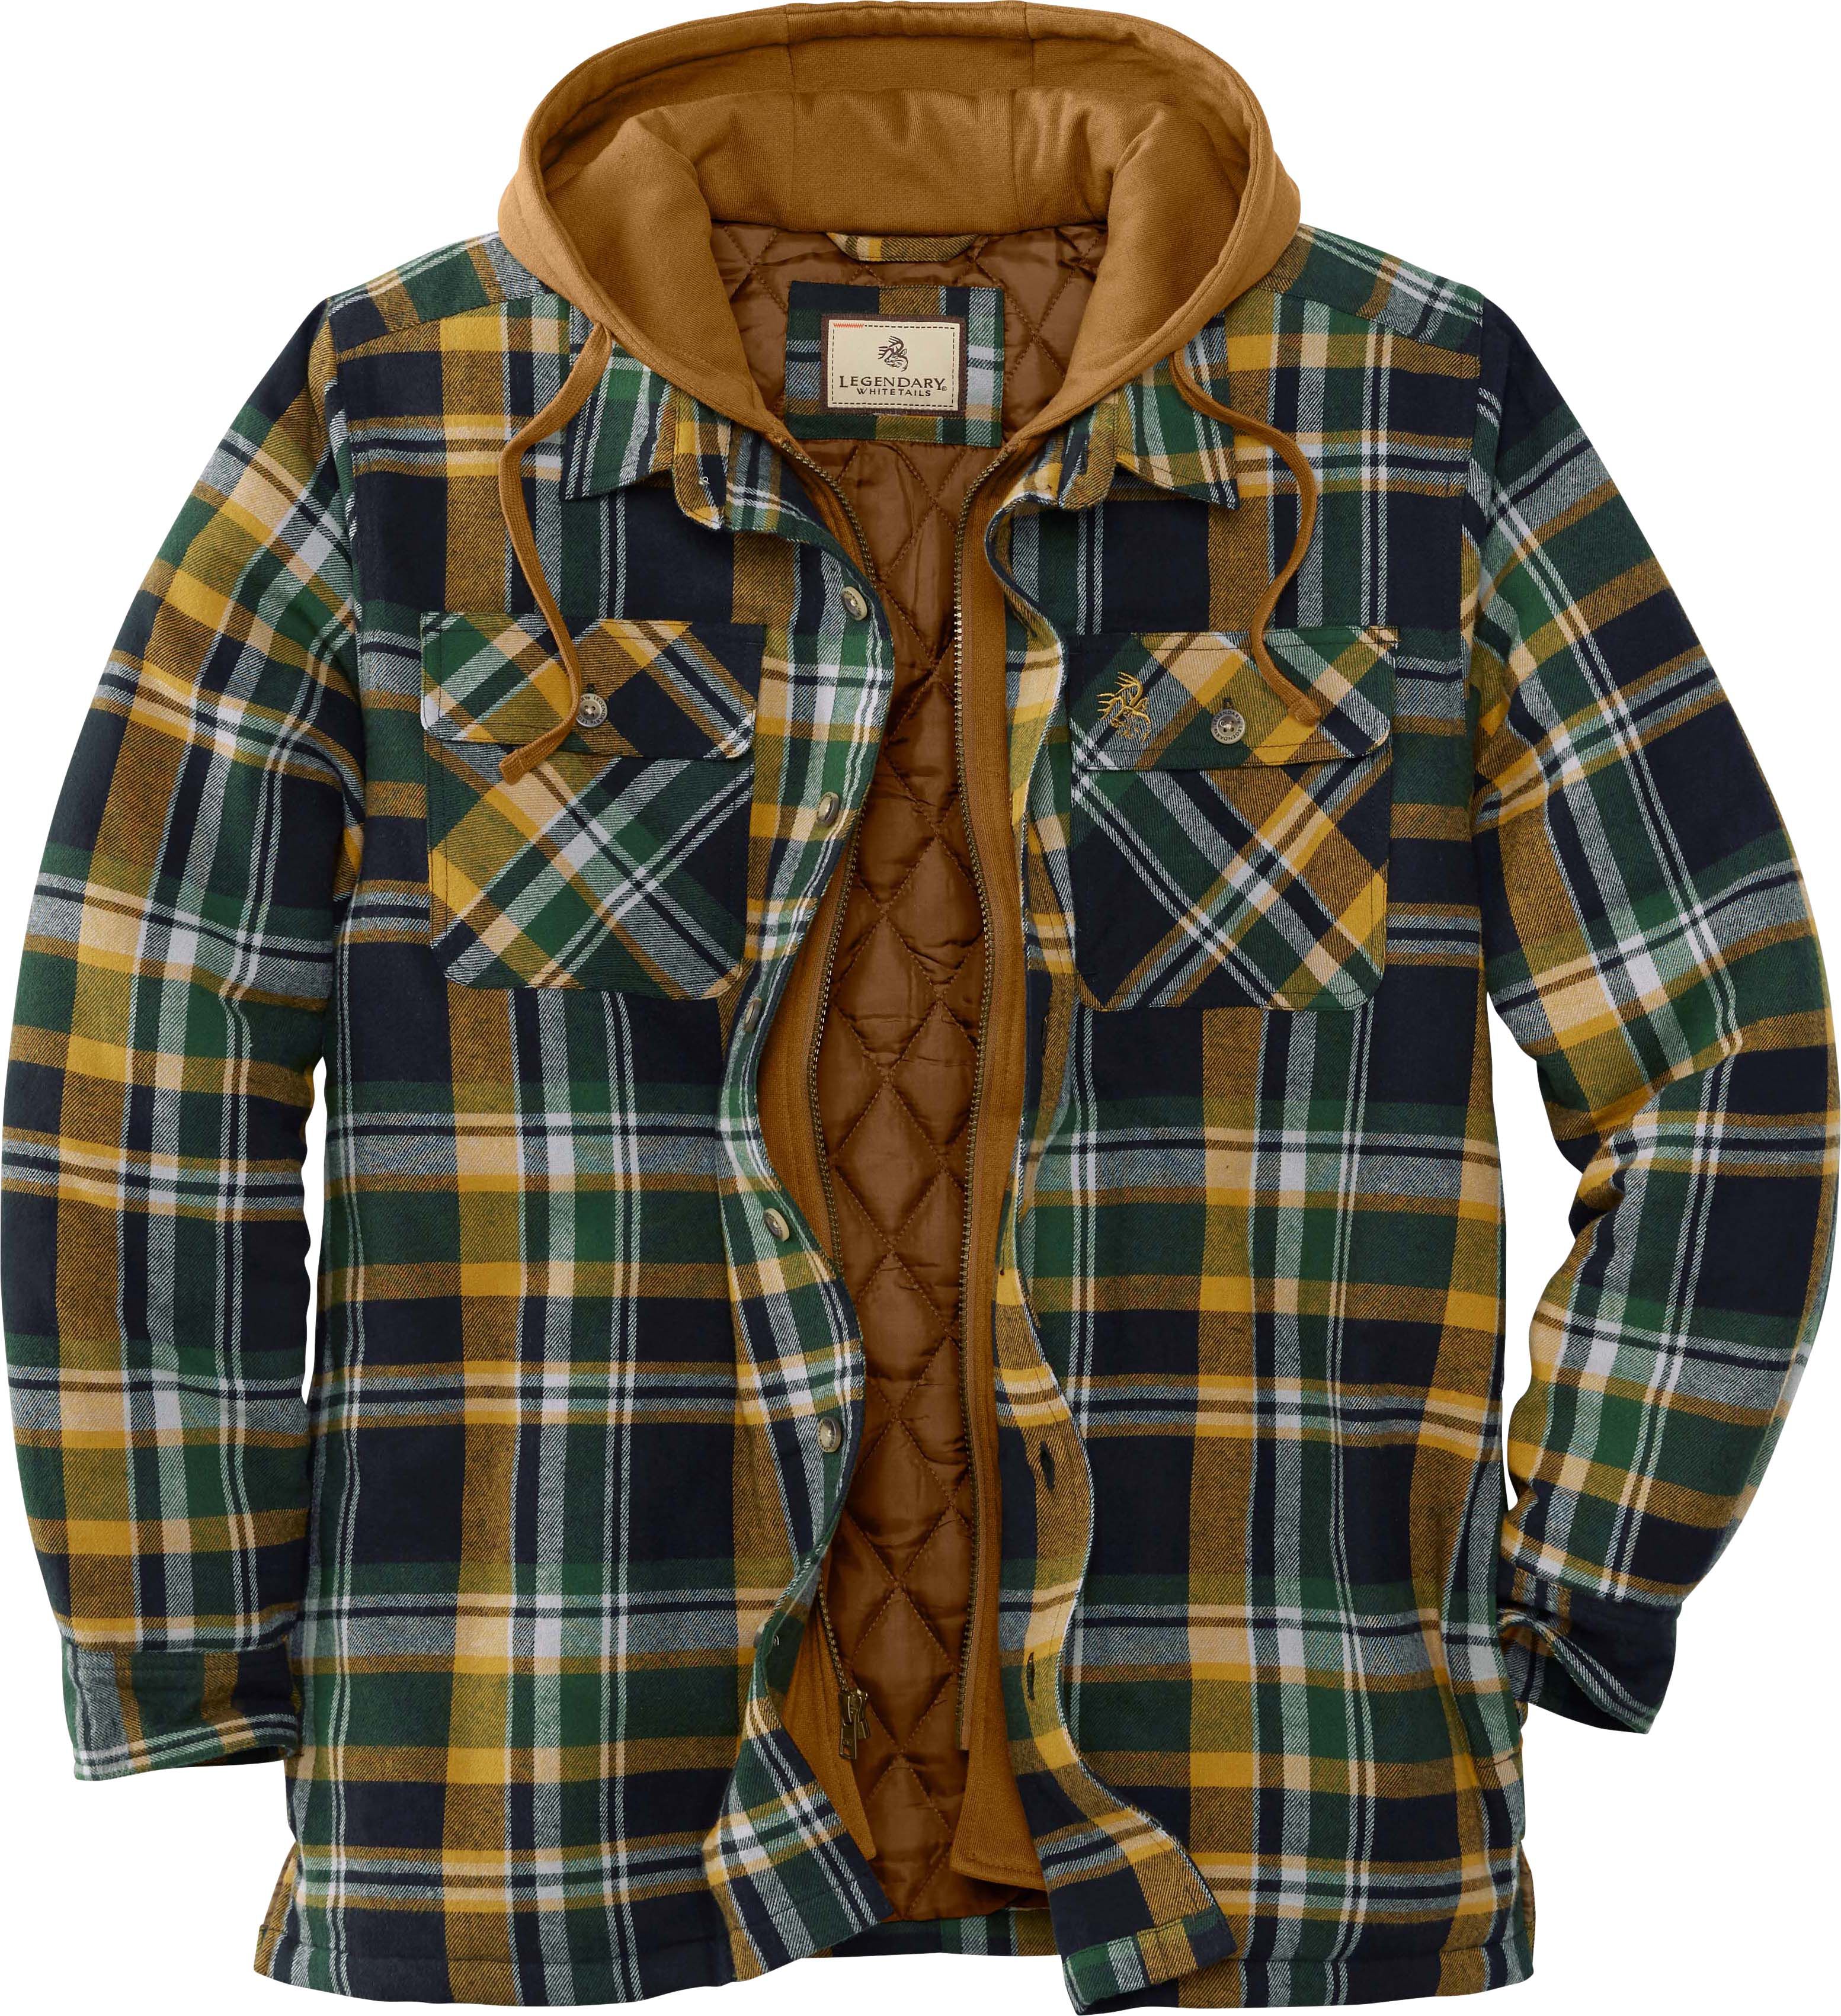 Women Plaid Hoodies Sweatshirt Long Sleeve Casual Coat Jacket Tops Blouse XL-5XL